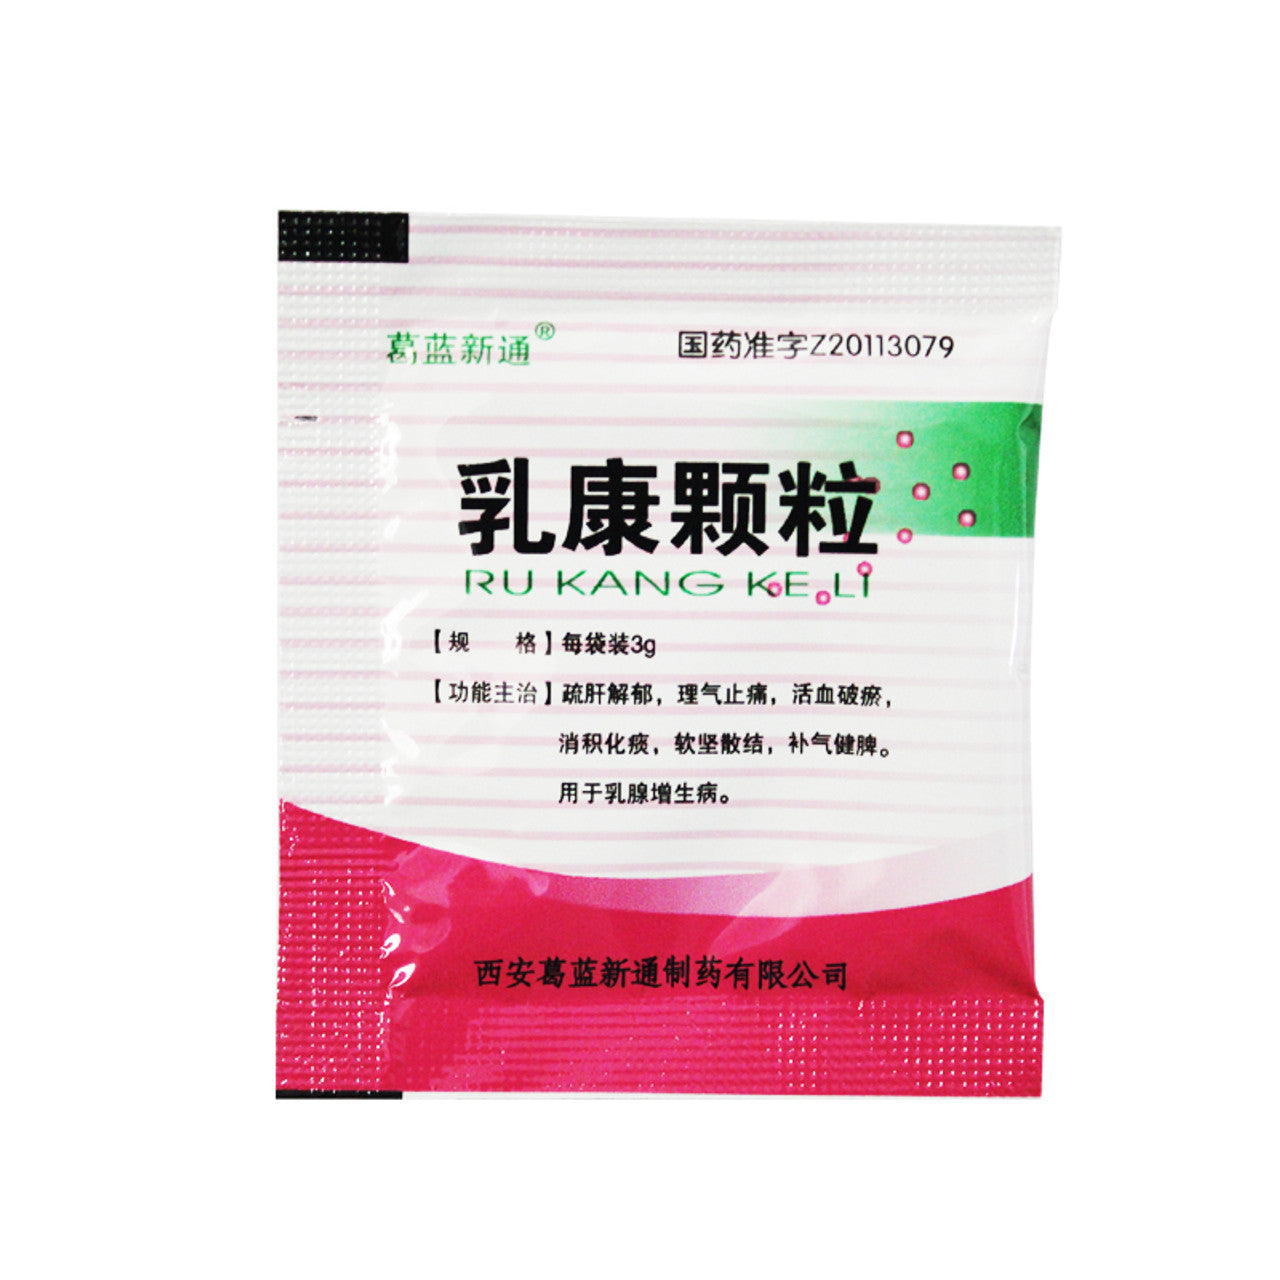 China Herb. Brand GELANXINTONG. RUKANG KELI or Rukang Keli or Ru Kang Ke Li or Rukang Granules or Ru Kang Granules or RuKangKeLi for breast hyperplasia.